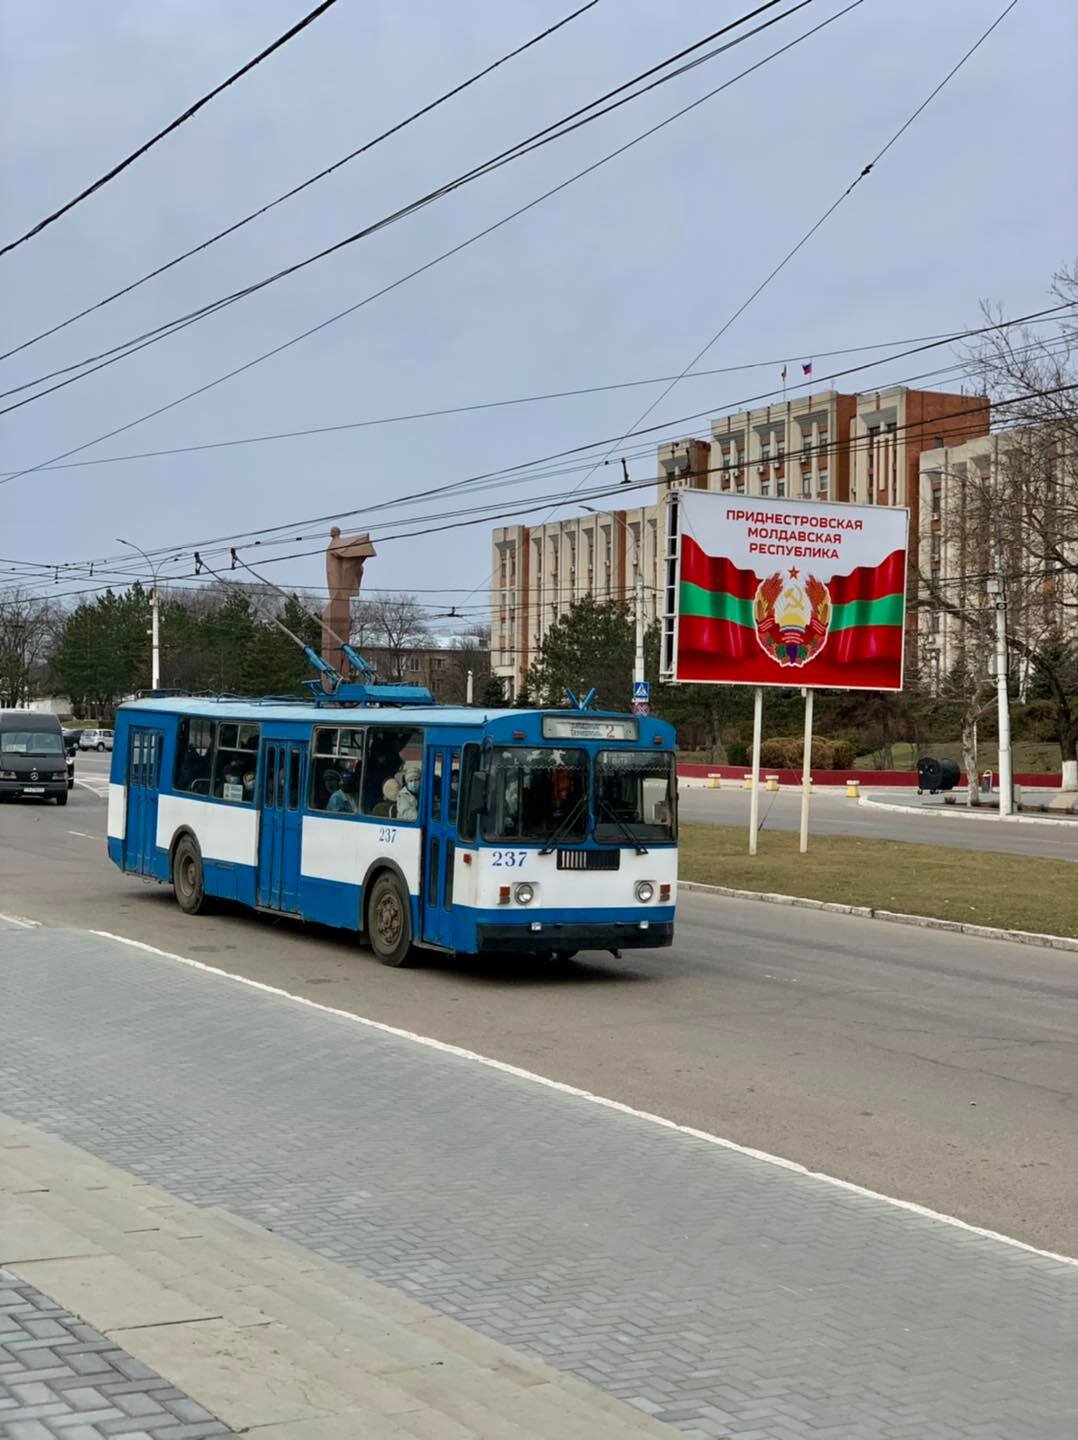 Our experience of Tiraspol, Transnistria22.jpg